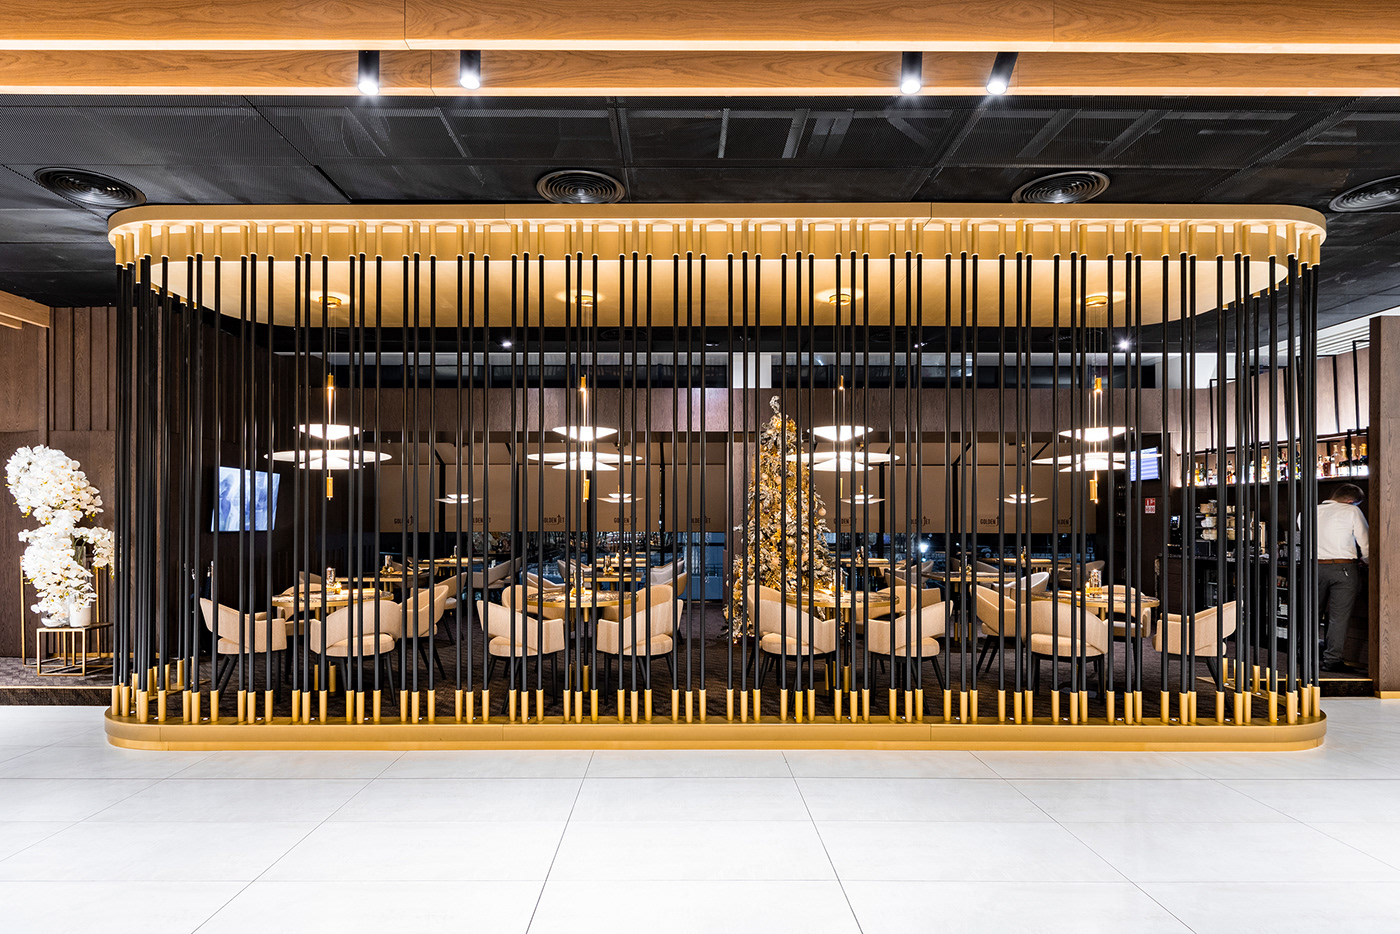 restaurant cafe bar Interior interiordesign architecture openspace terminal airport departure public publicspace archform